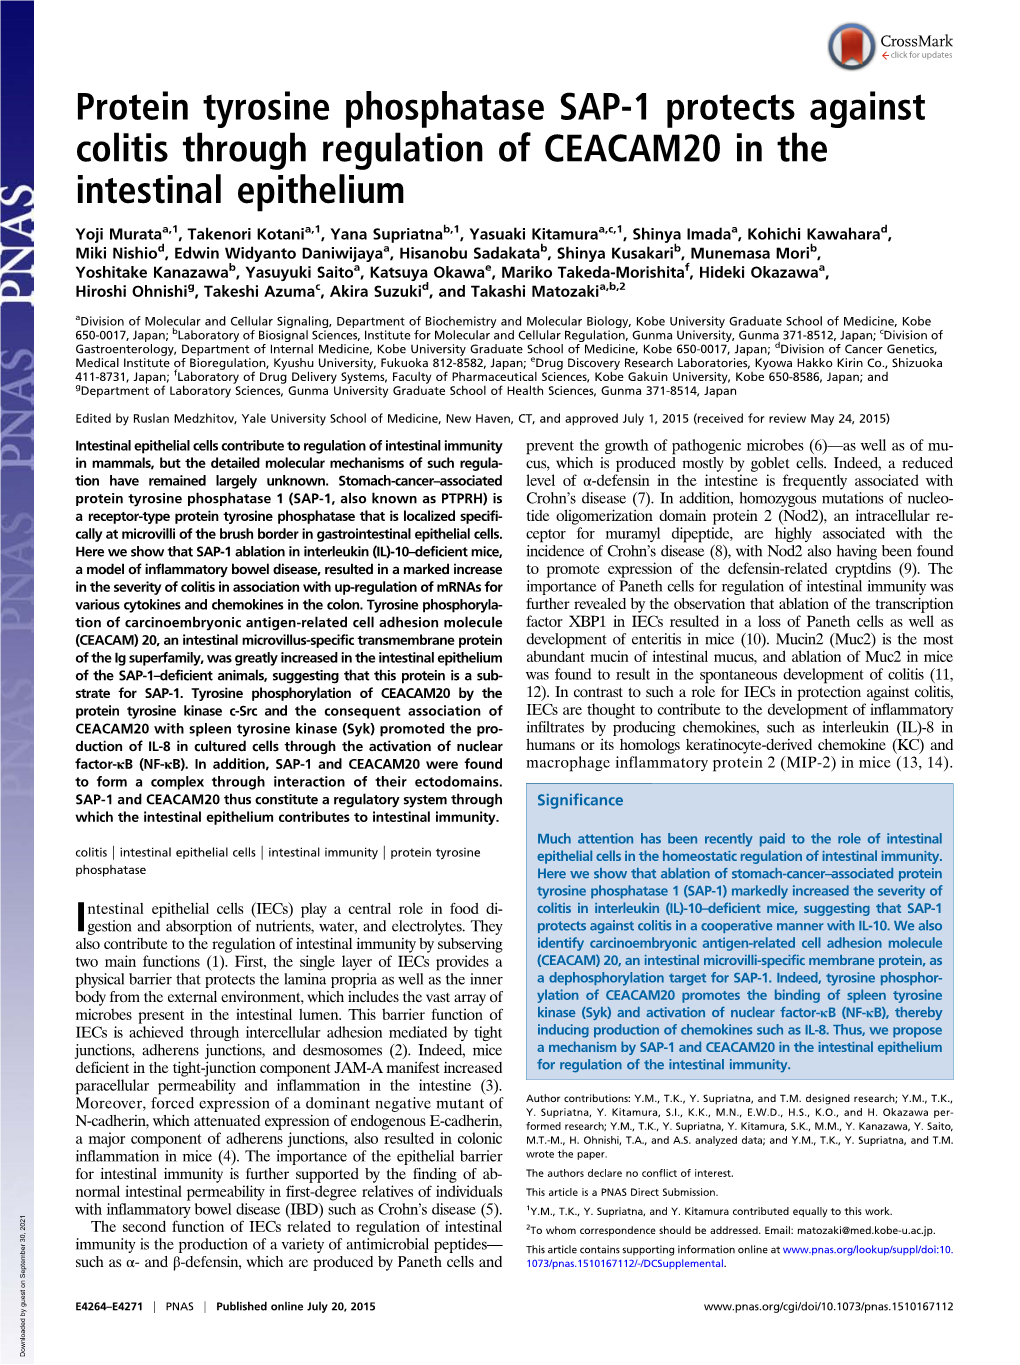 Protein Tyrosine Phosphatase SAP-1 Protects Against Colitis Through Regulation of CEACAM20 in the Intestinal Epithelium